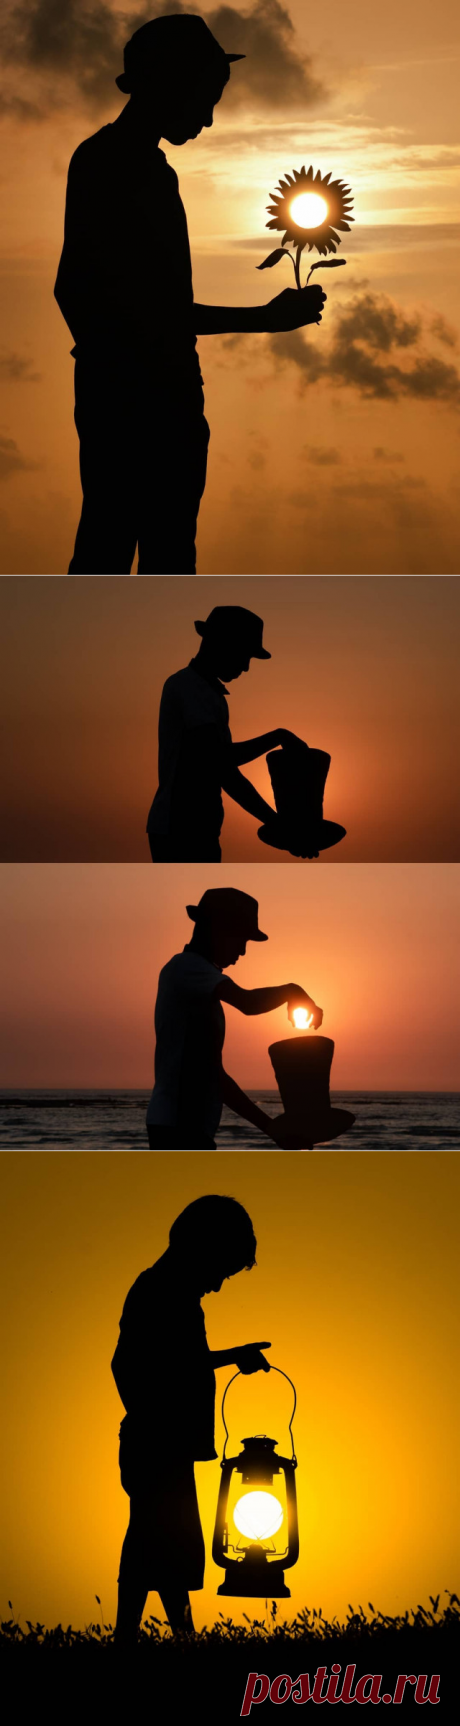 Силуэты на заходячем солнце. Индийский фотограф Крутик Тхакур (Krutik Thakur)